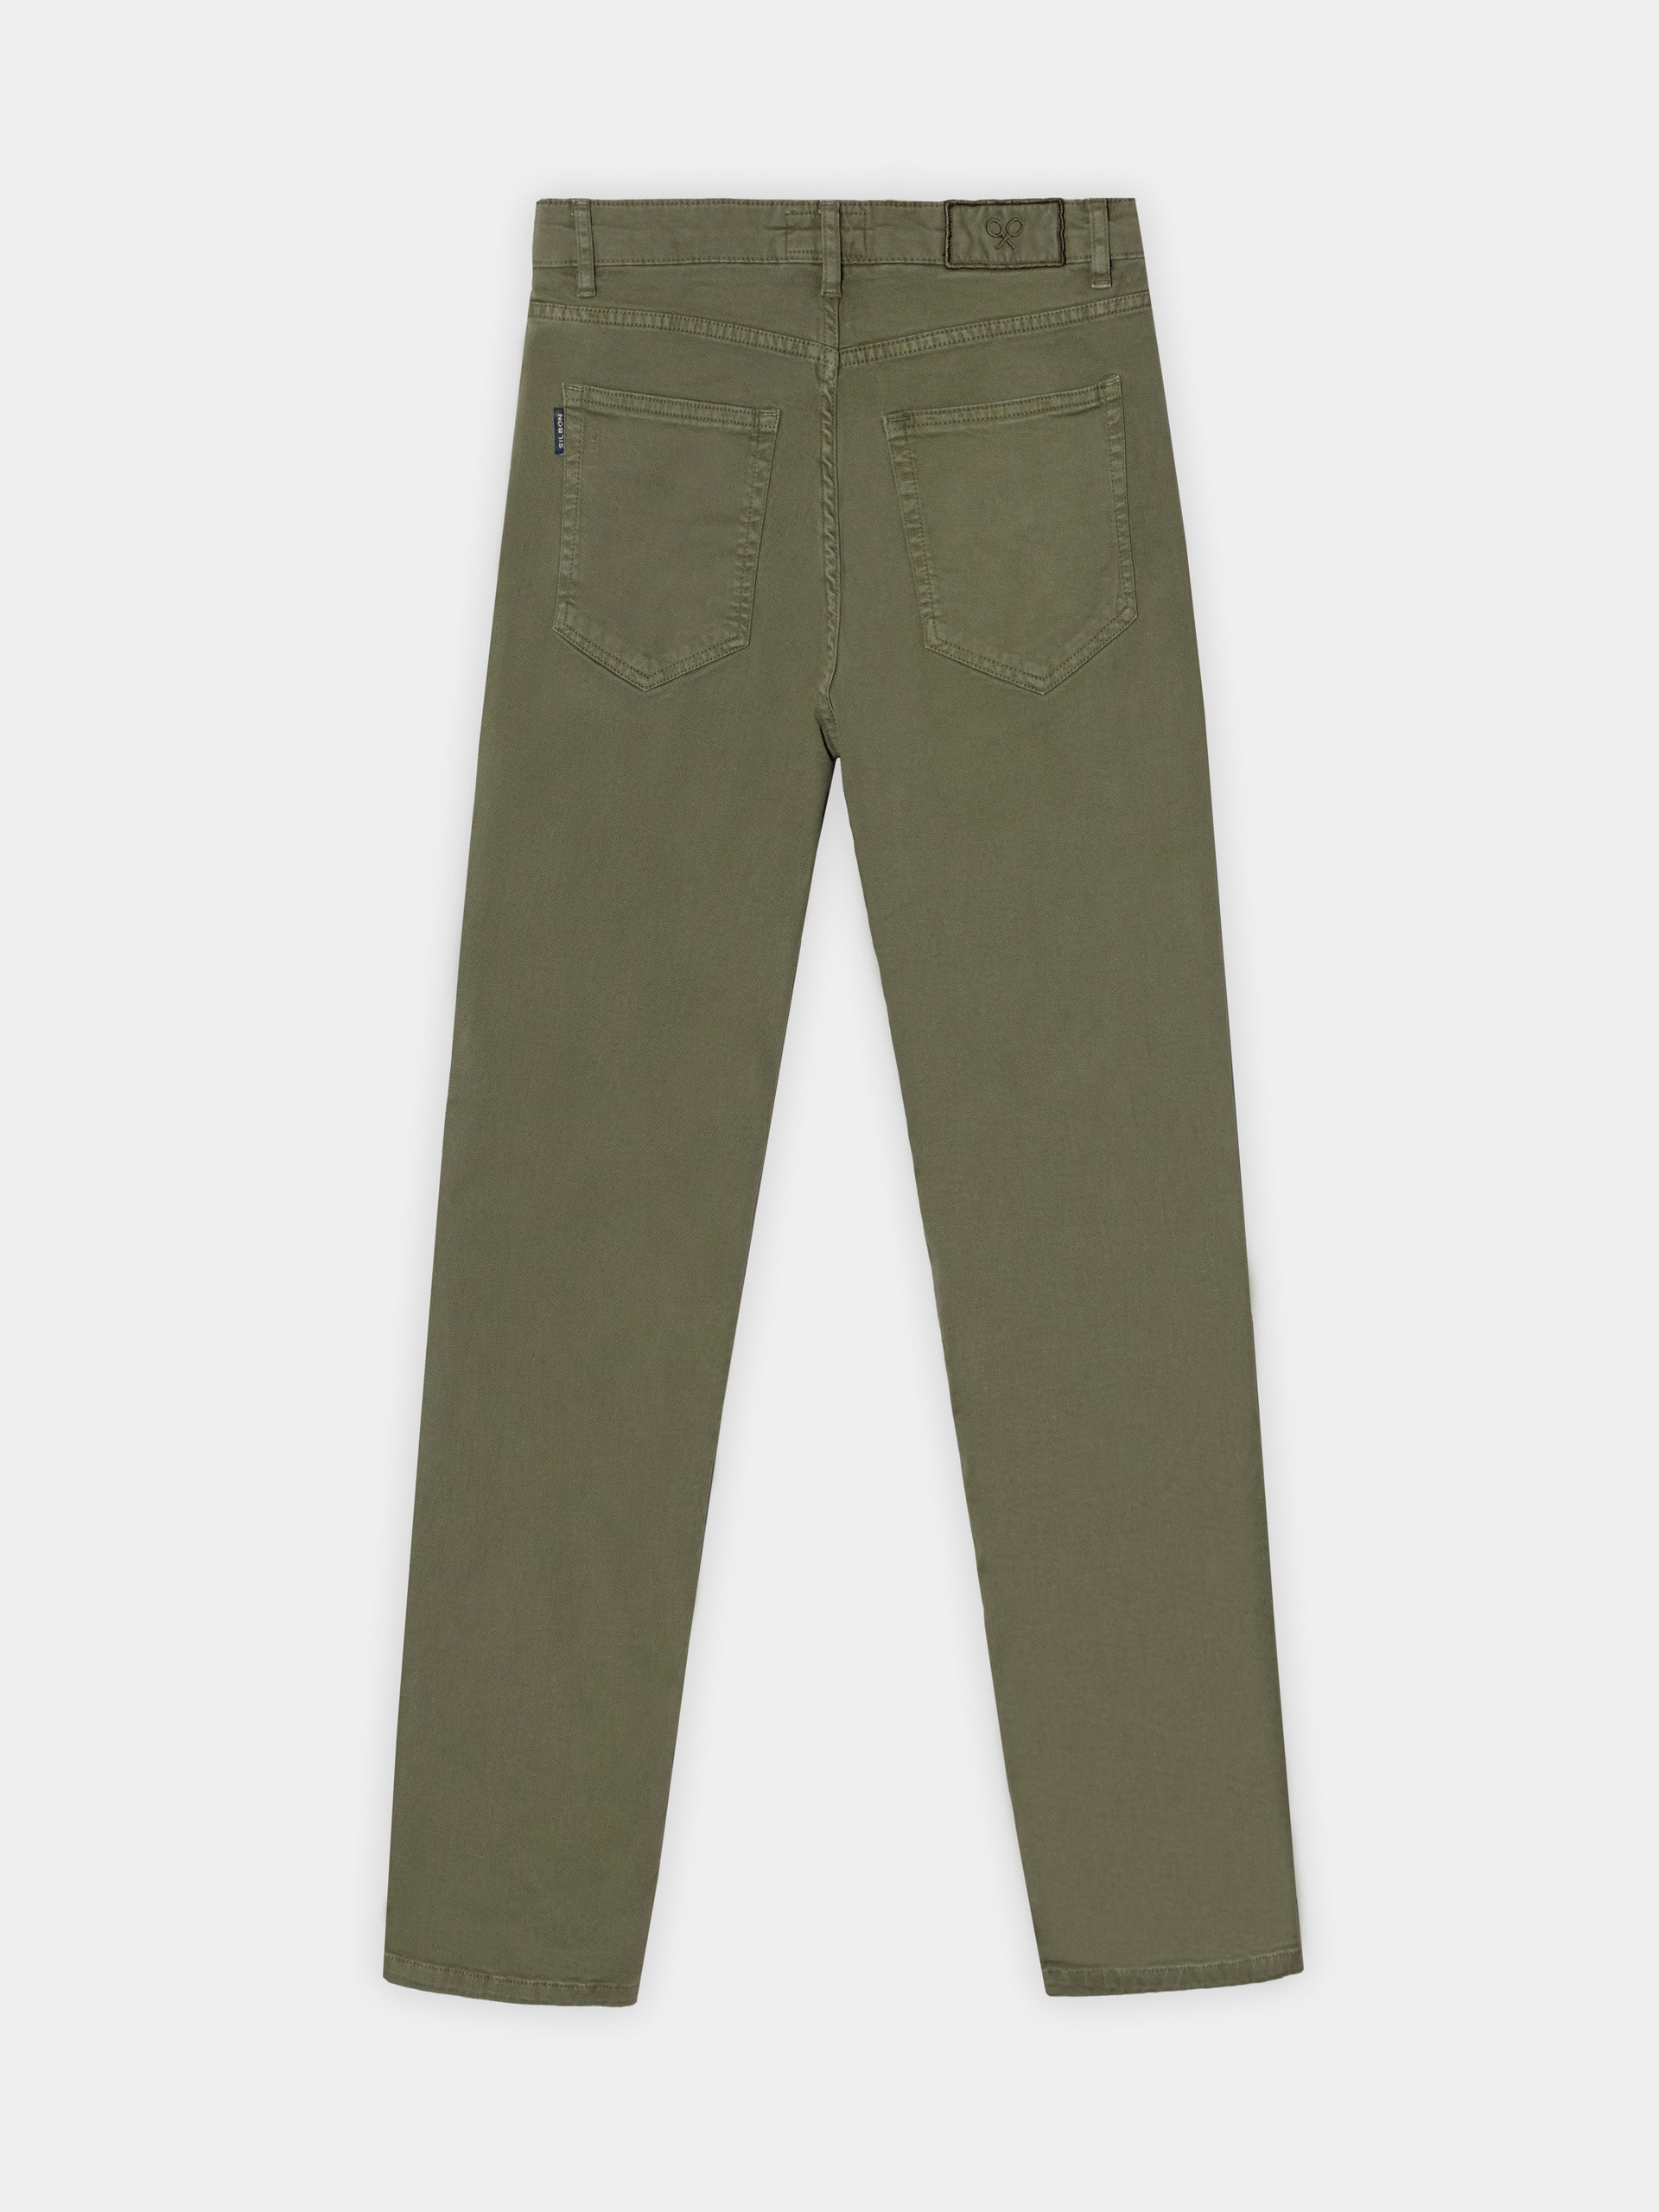 Pantalon sport cinco bolsillos verde